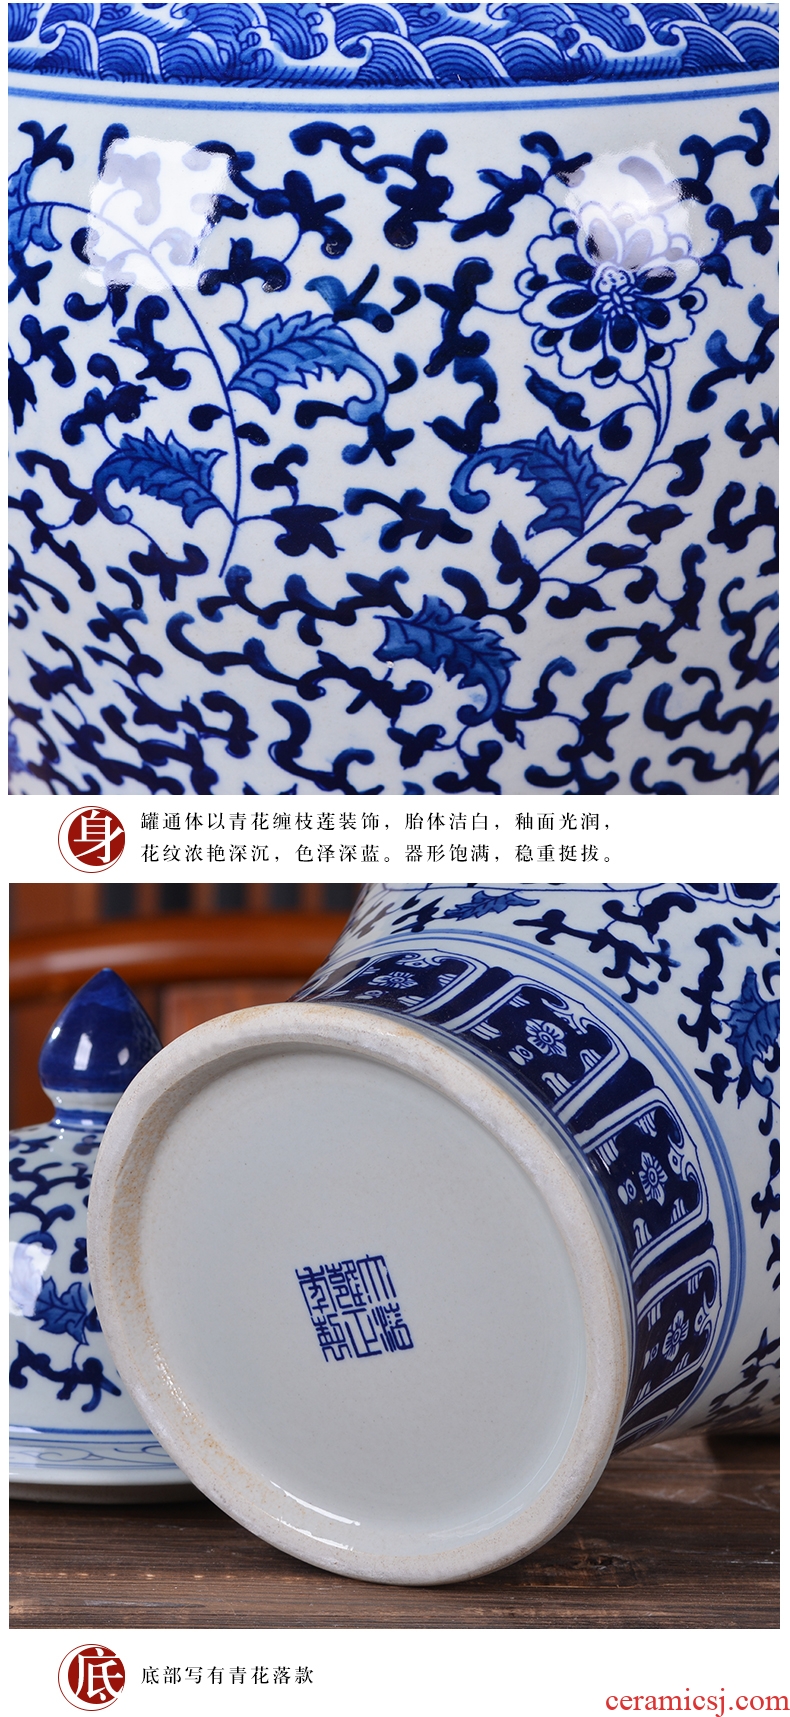 Jingdezhen ceramic vase furnishing articles landing a large golden gourd vases flower arrangement in modern Chinese style household decorations - 569203857099